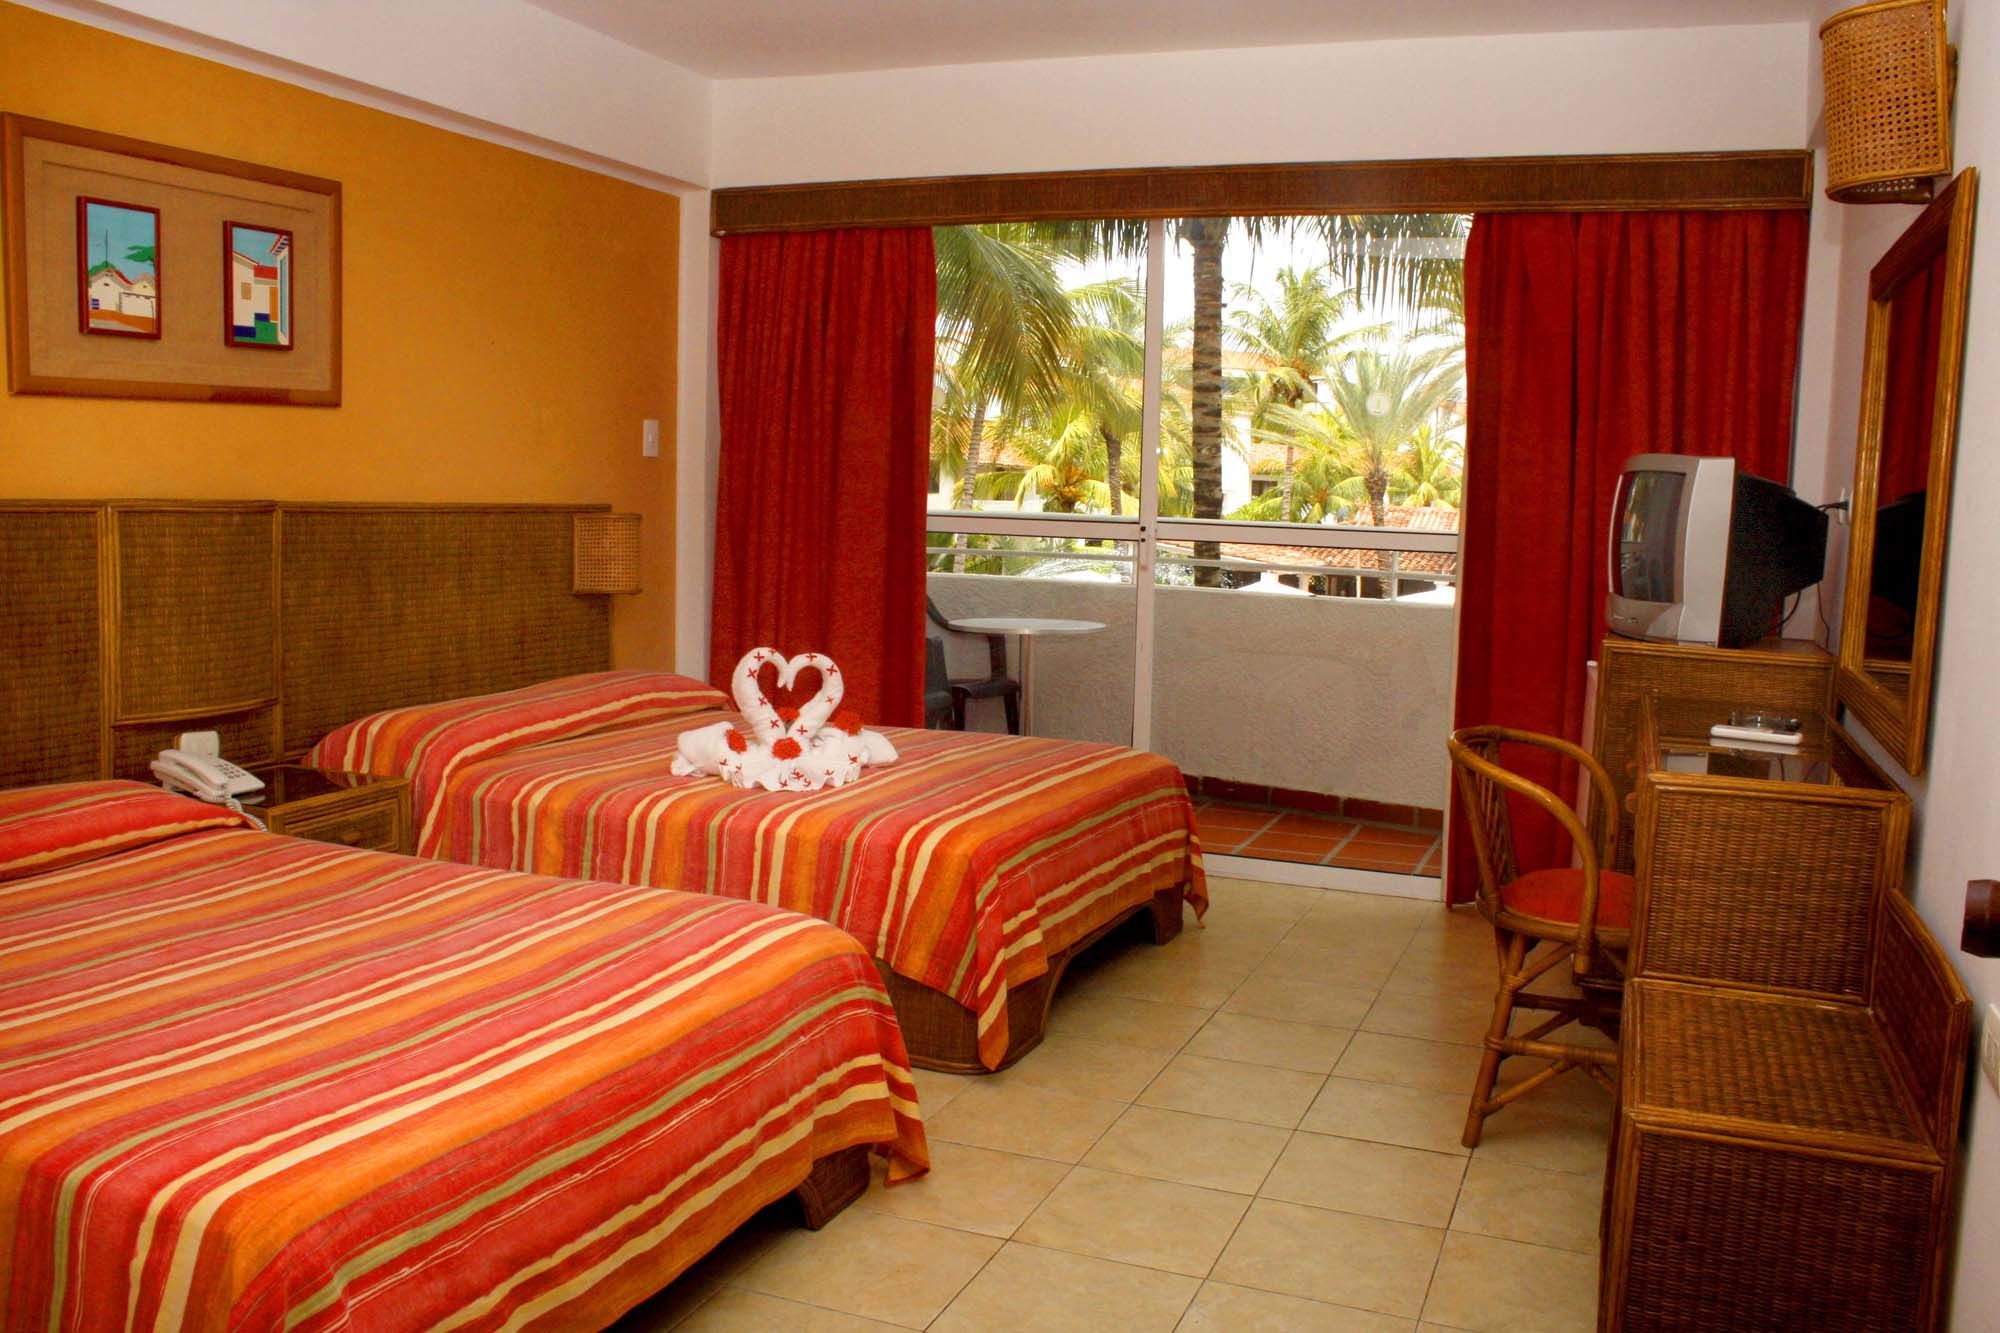 Costa caribe beach hotel resort венесуэла. Costa Caribe Beach Hotel Resort 3 Венесуэла. SUNSOL Ecoland Hotel Resort 4 Венесуэла. Costa Caribe Beach Hotel Resort 4 Венесуэла.